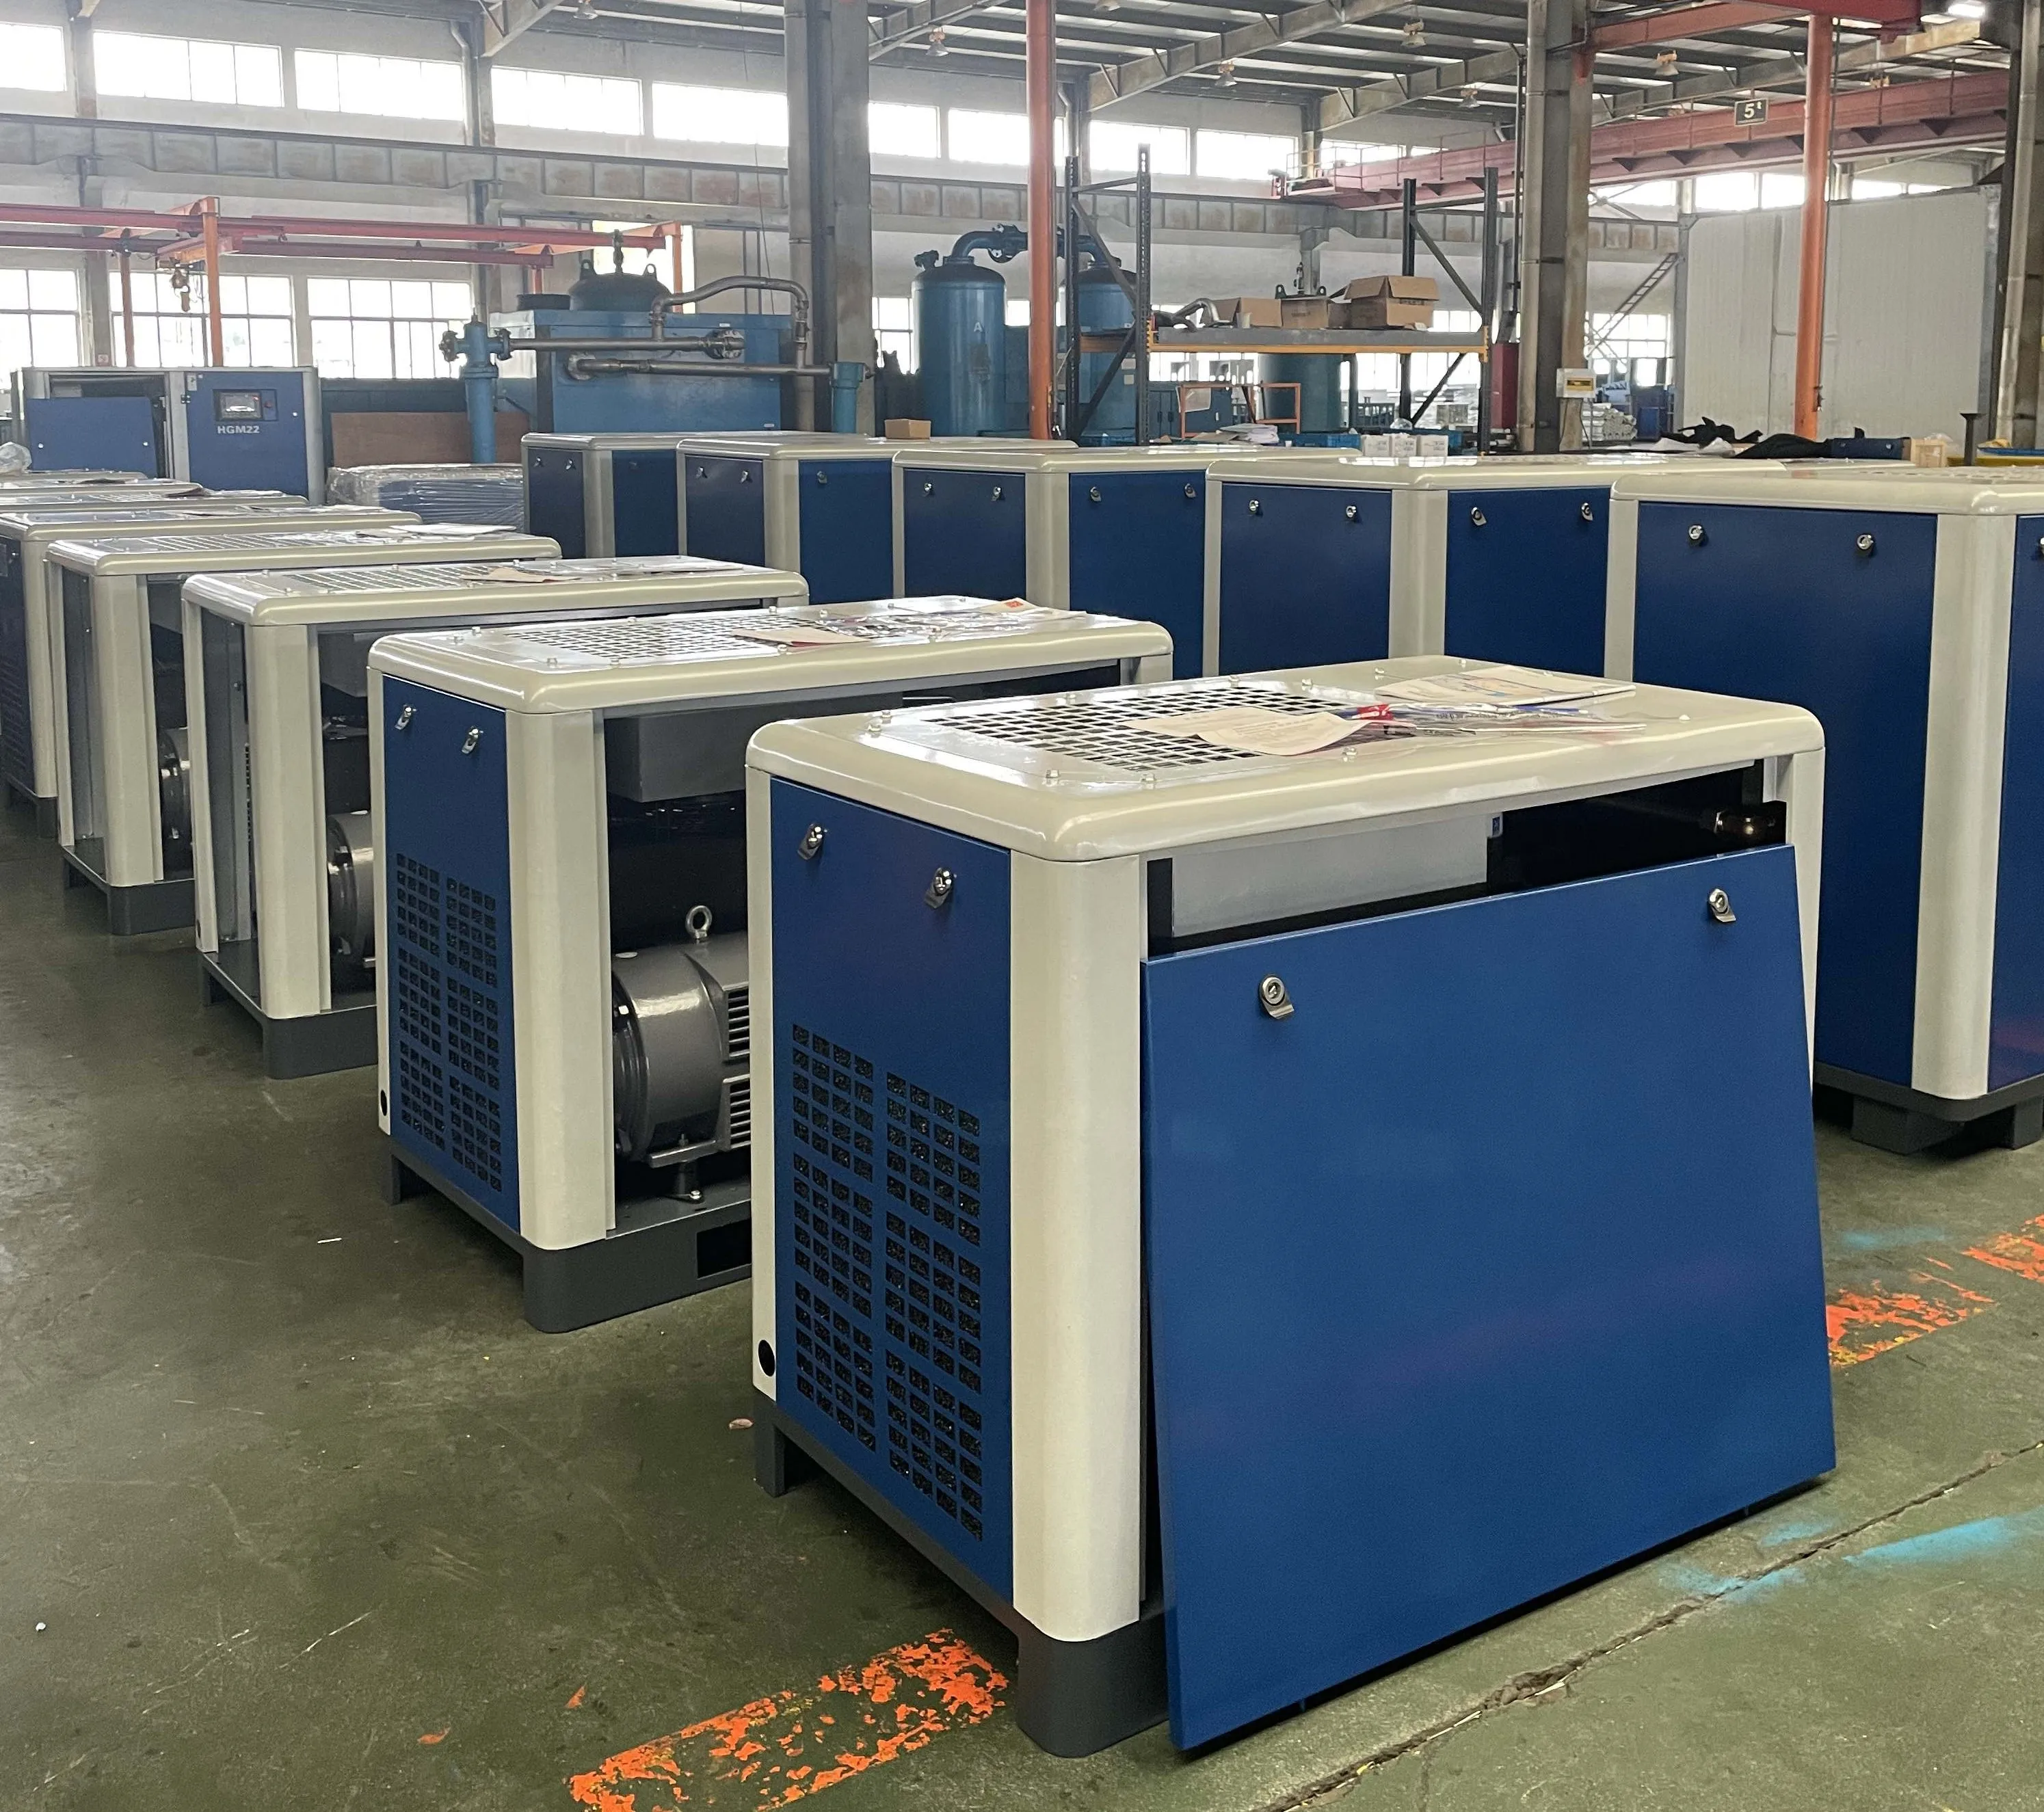 7.5kw Hongwuhuan Permanent Magnet VSD Plastic Industry Screw Air Compressor LV7M